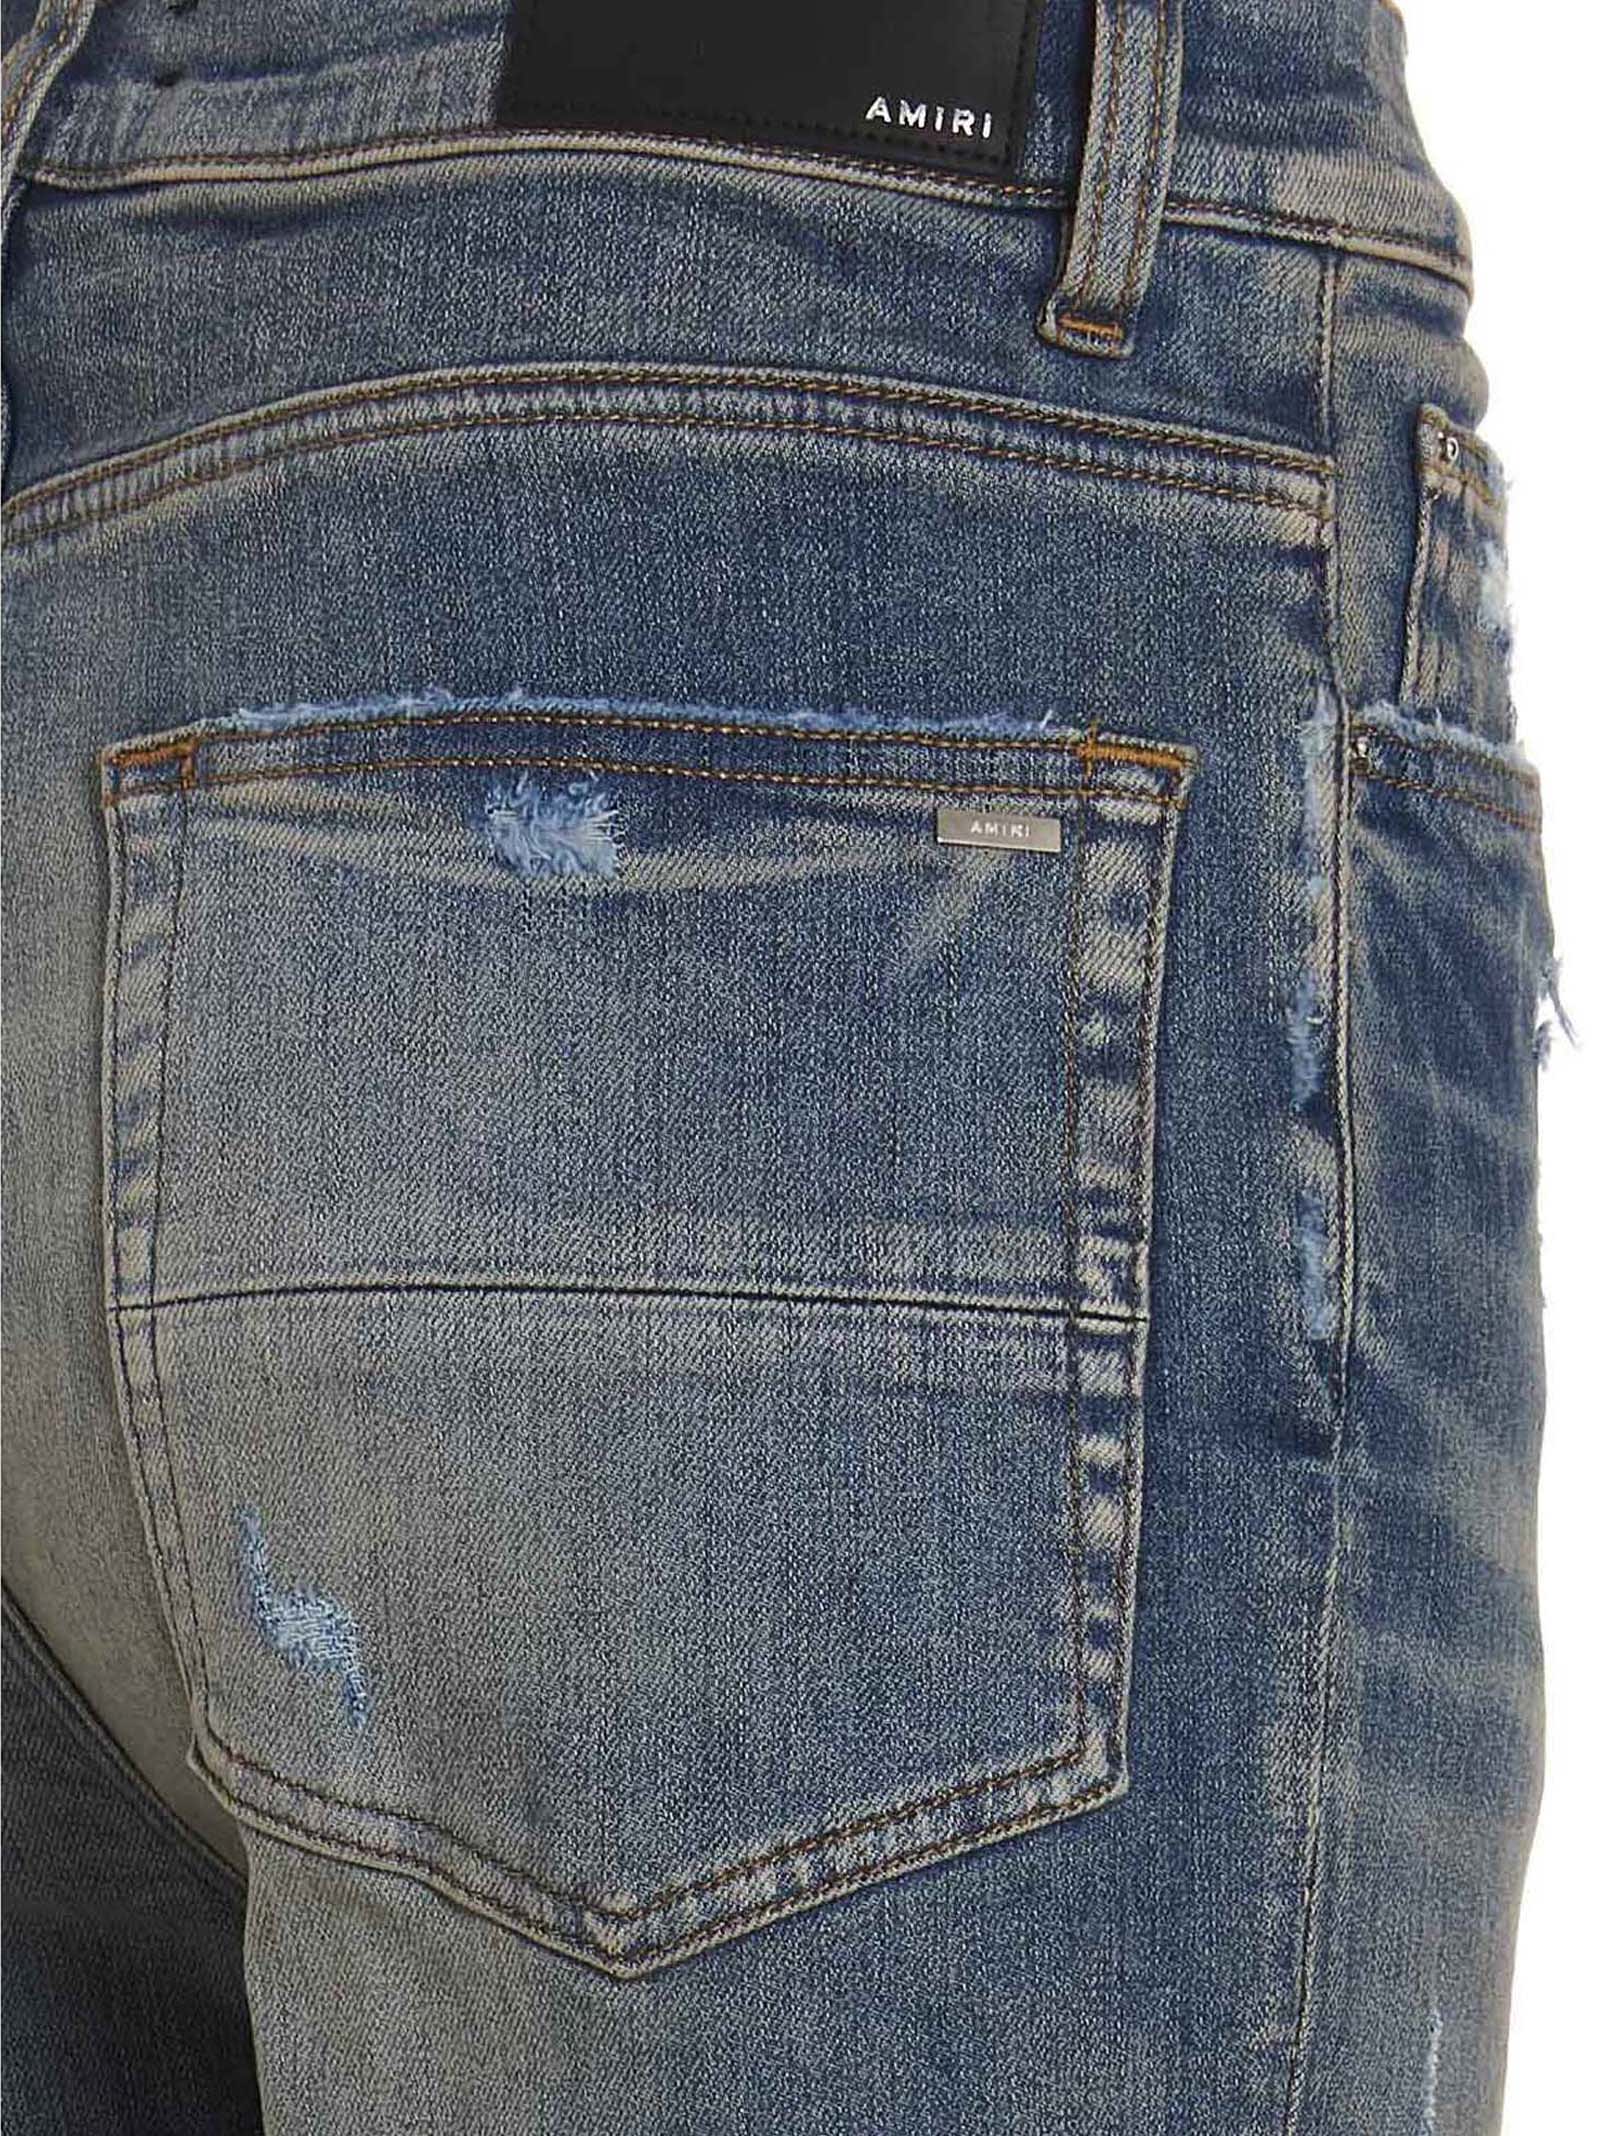 Destroyed Denim Jeans | Smart Closet